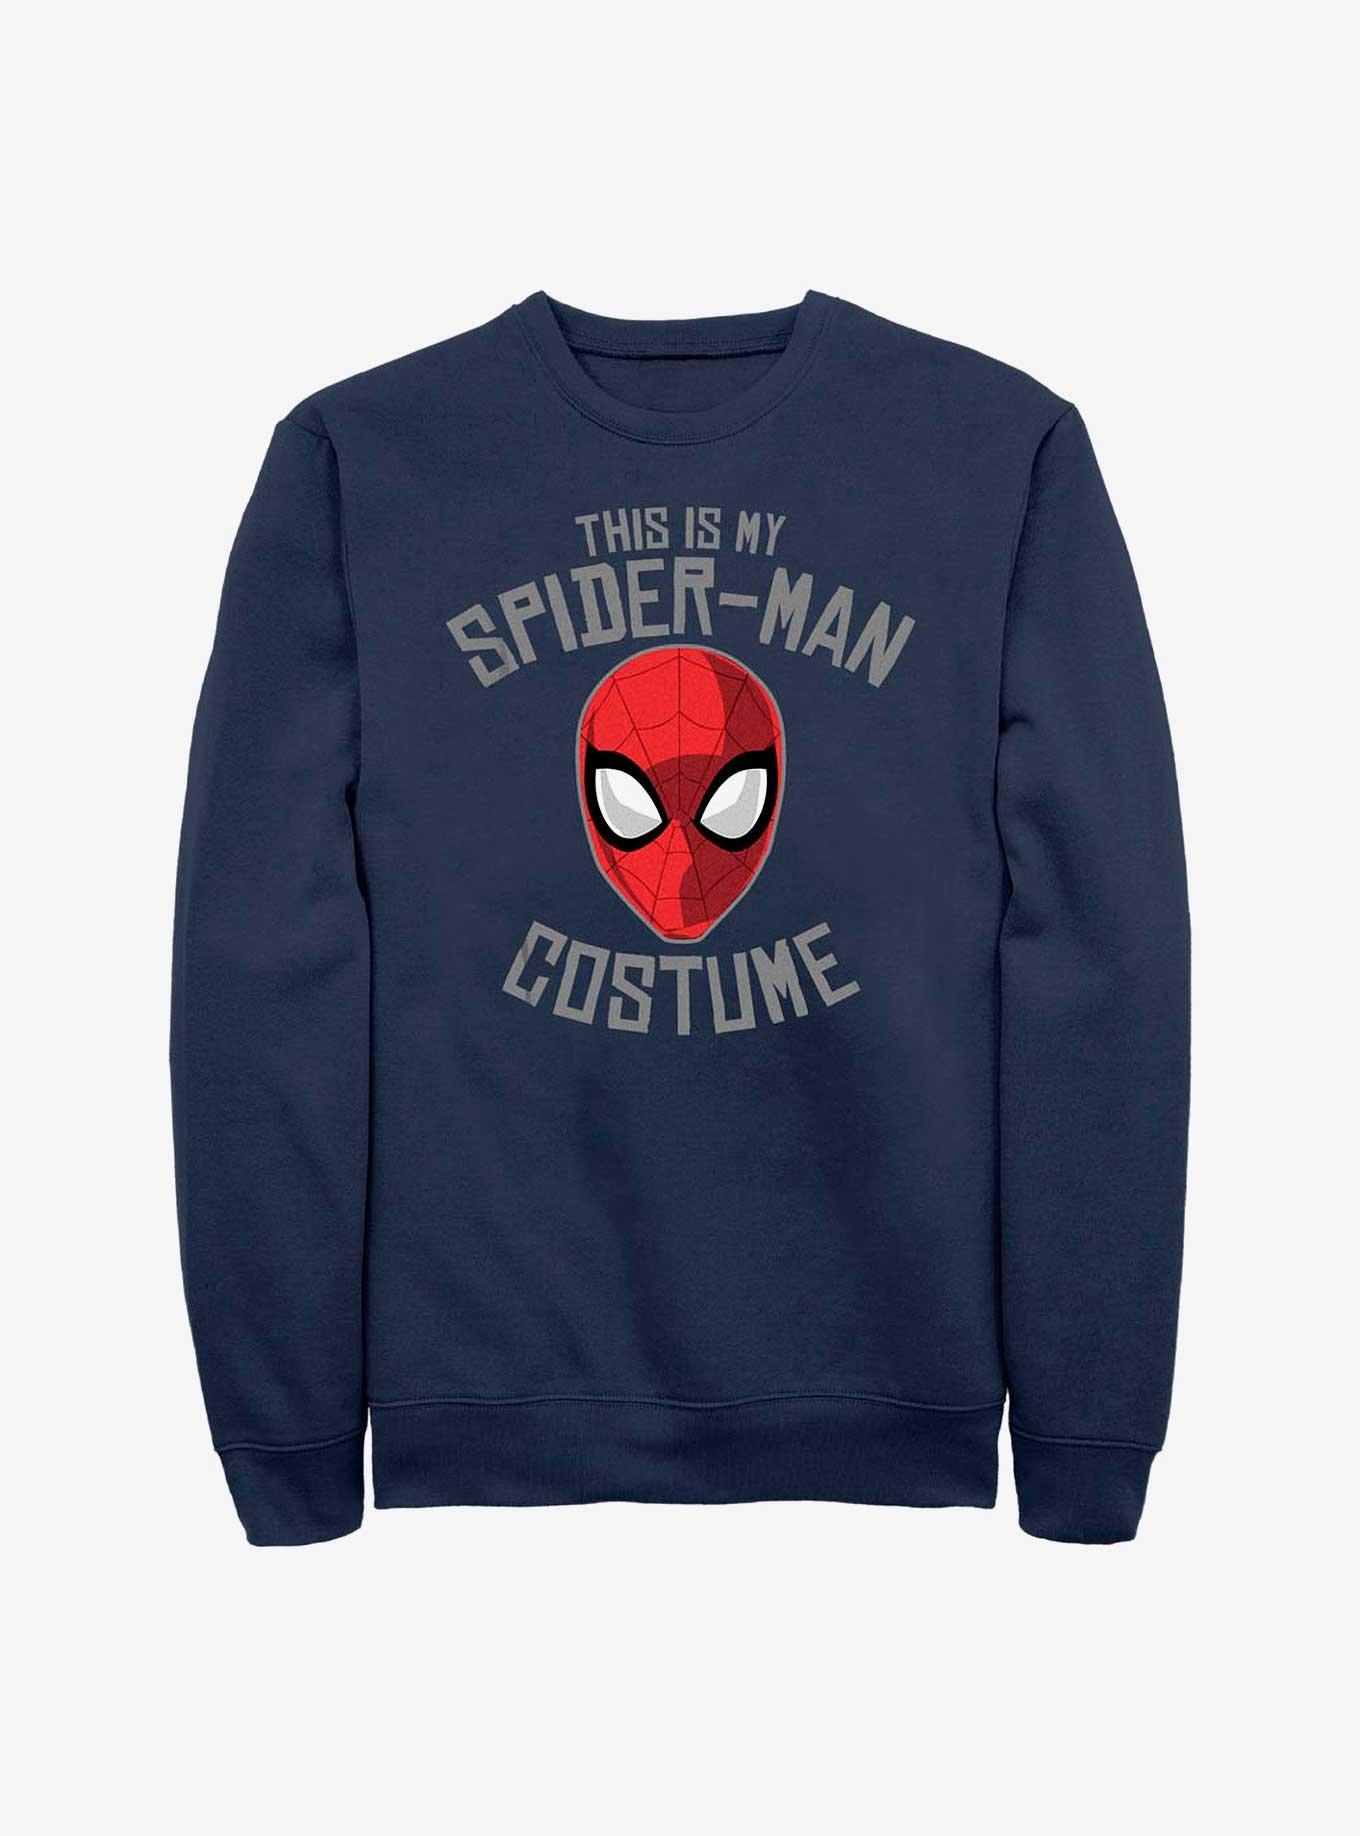 Marvel Spider-Man This Is My Costume Sweatshirt, NAVY, hi-res